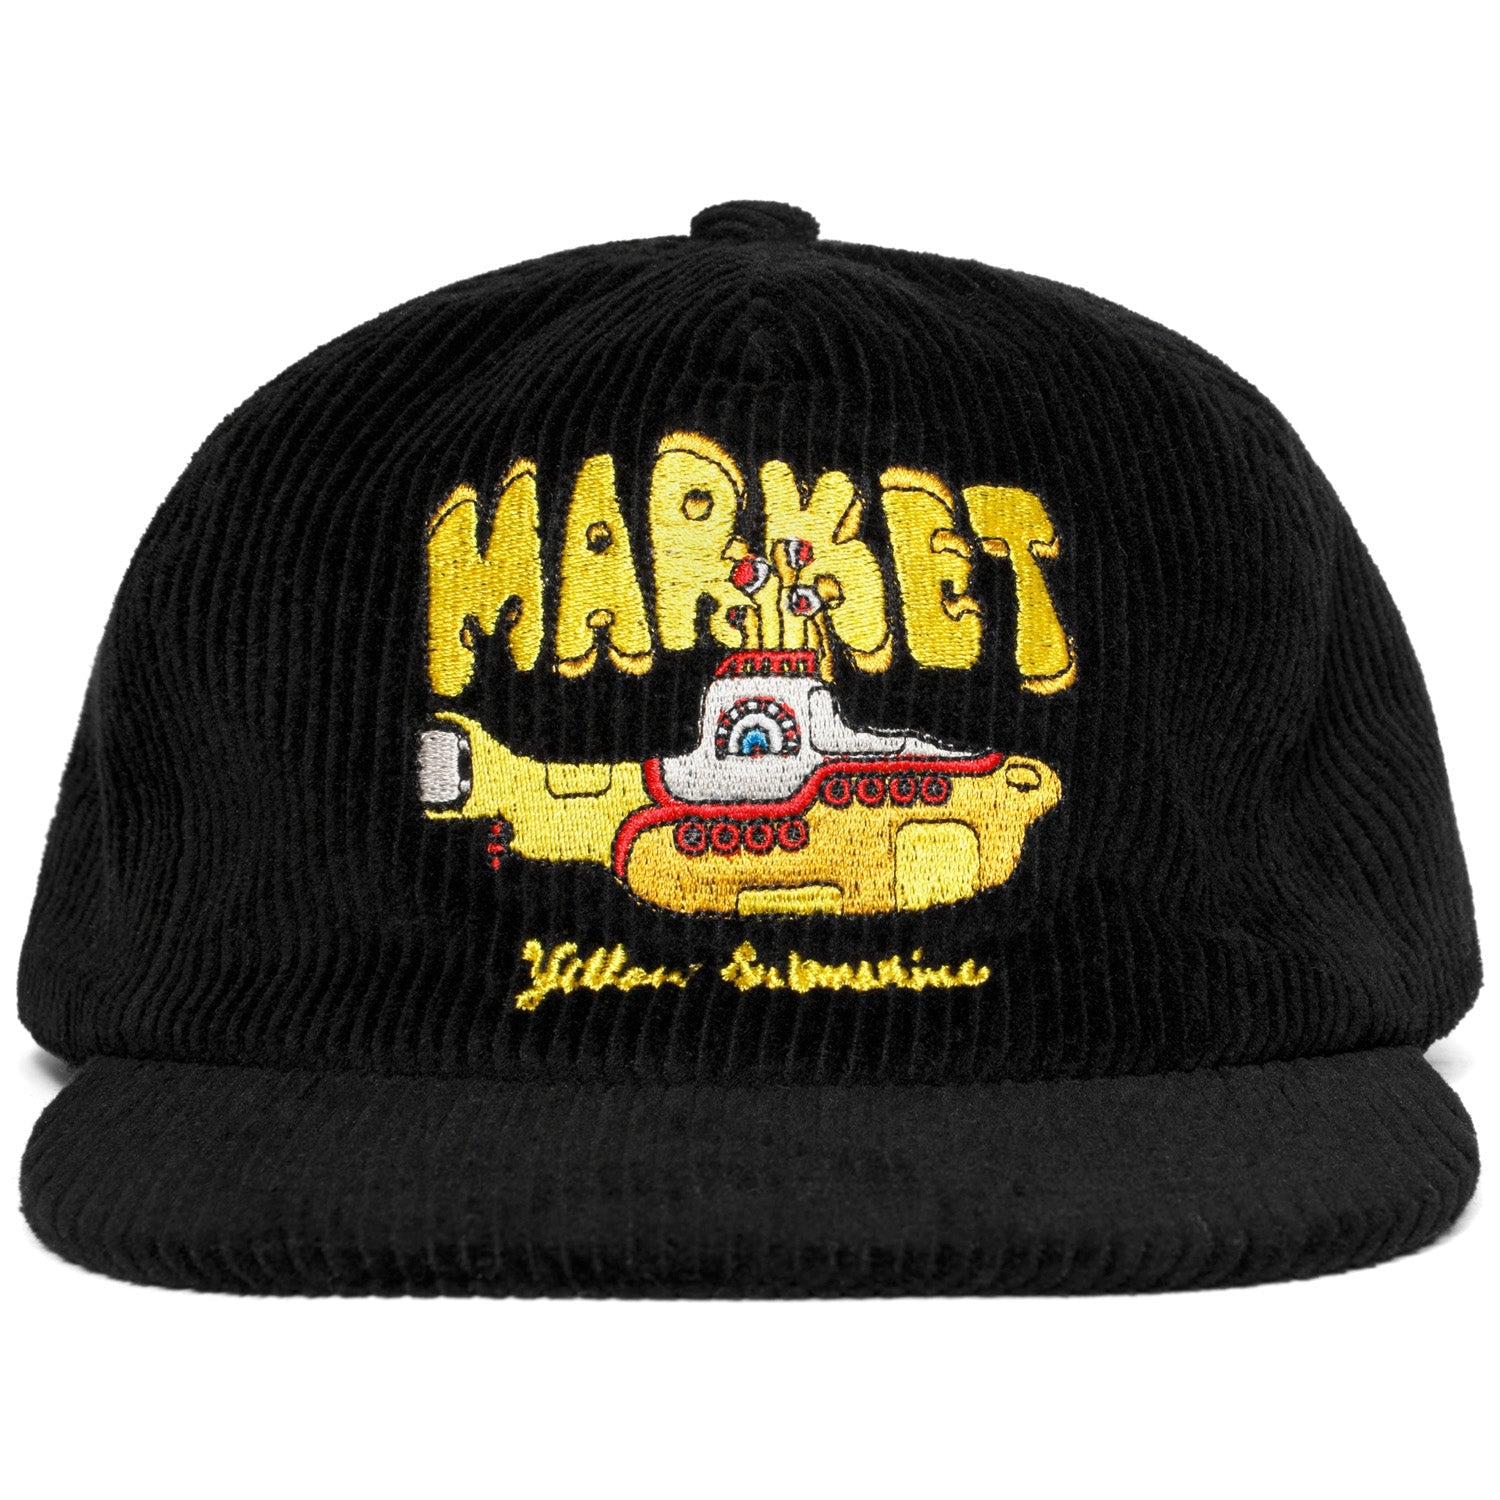 Market x Beatles Yellow Submarine 5 Panel Hat Black - HEADWEAR - Canada